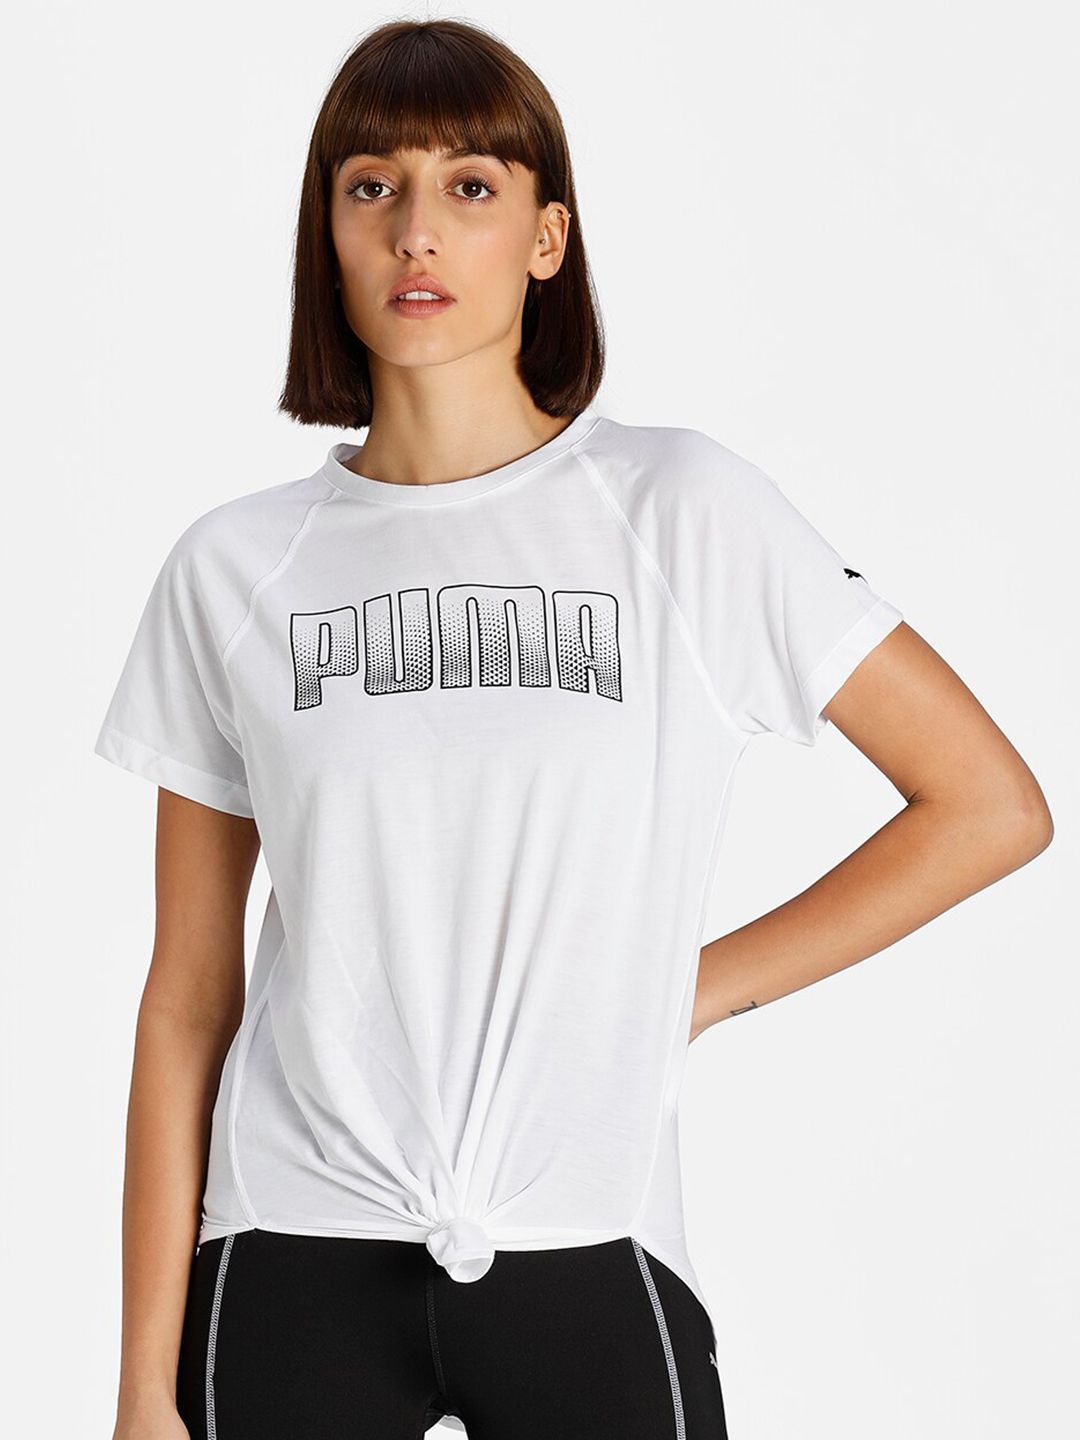 Puma Women White & Black Digital Logo Printed Training or Gym T-shirt Price in India